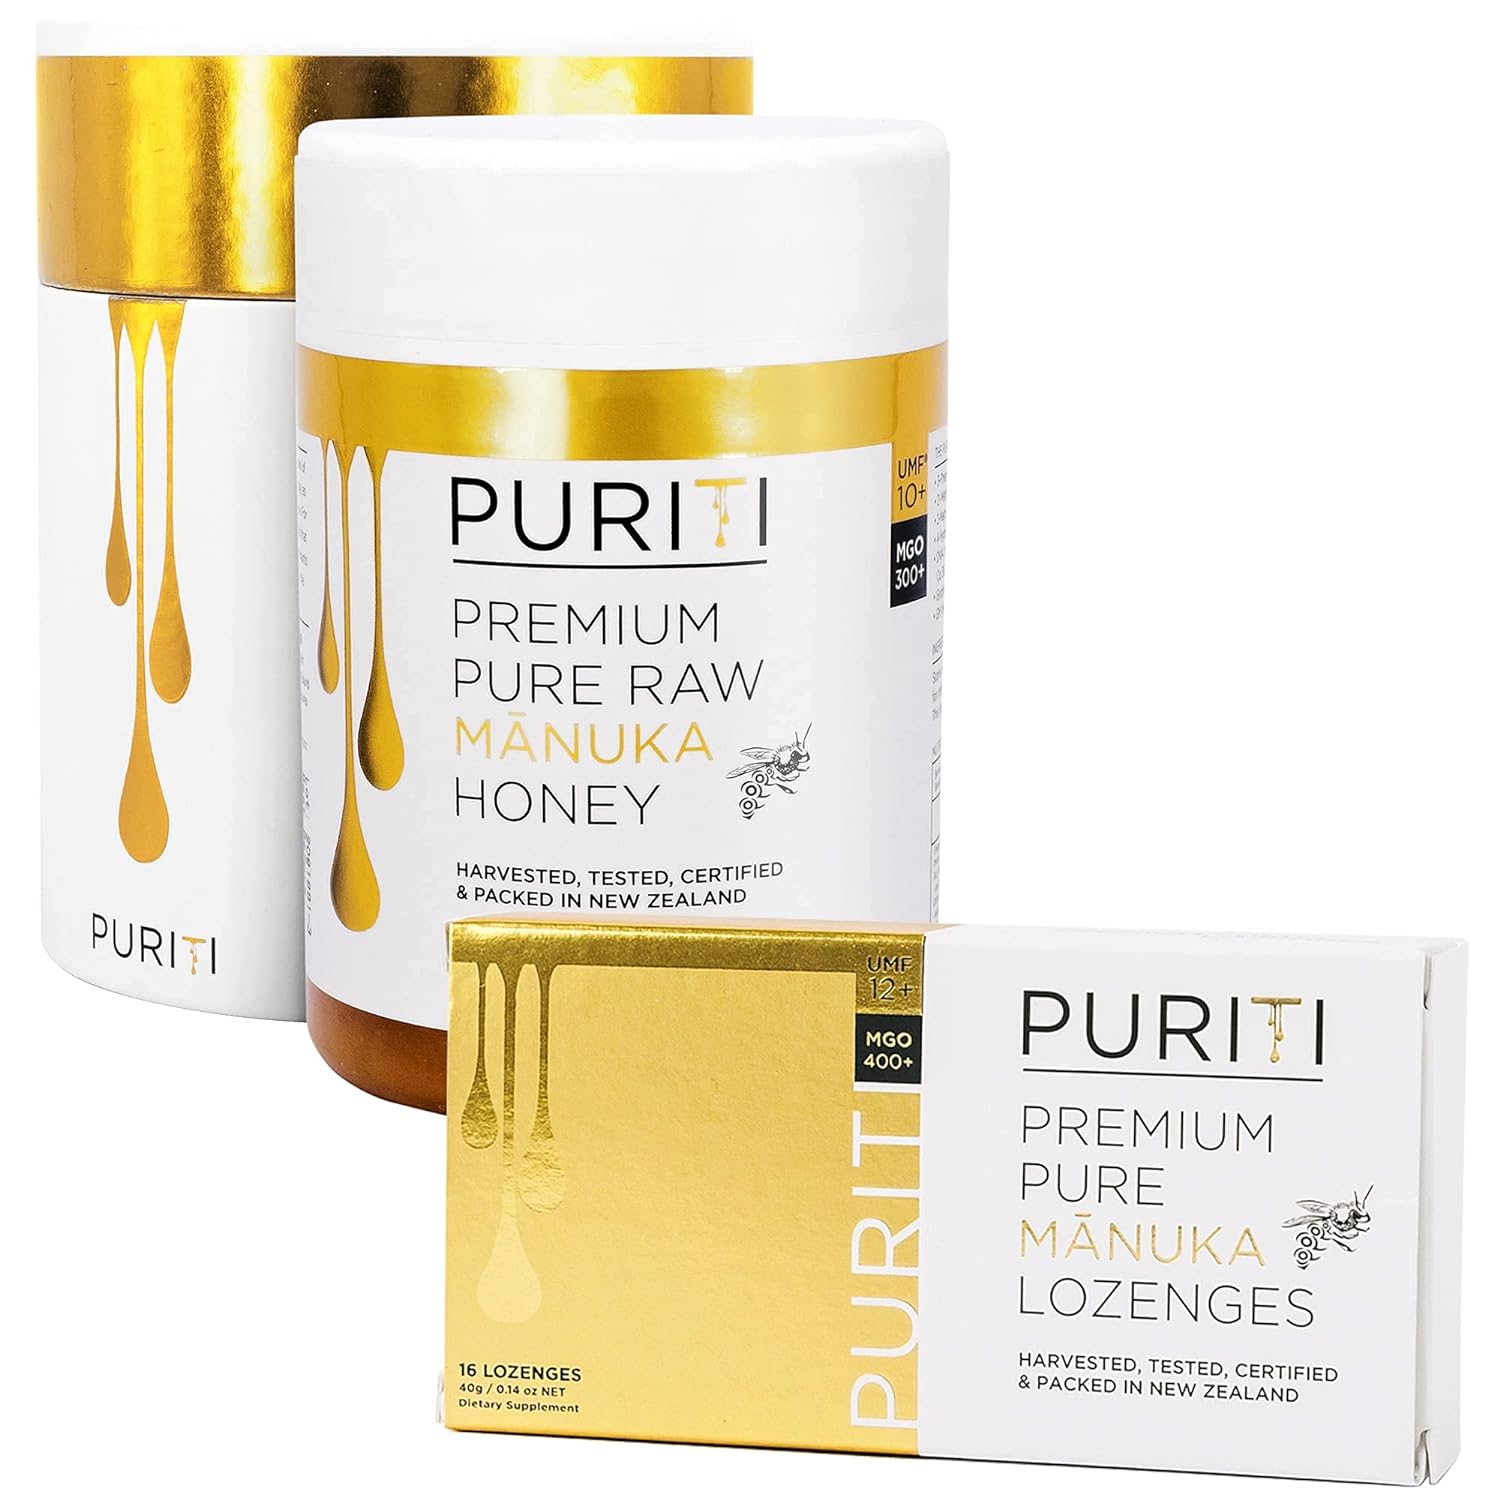 PURITI Manuka Honey Lozenges UMF 12+ (16 Pack) Manuka Honey UMF 10+ | Premium Sugar Free Throat Soothers for Coughs & So